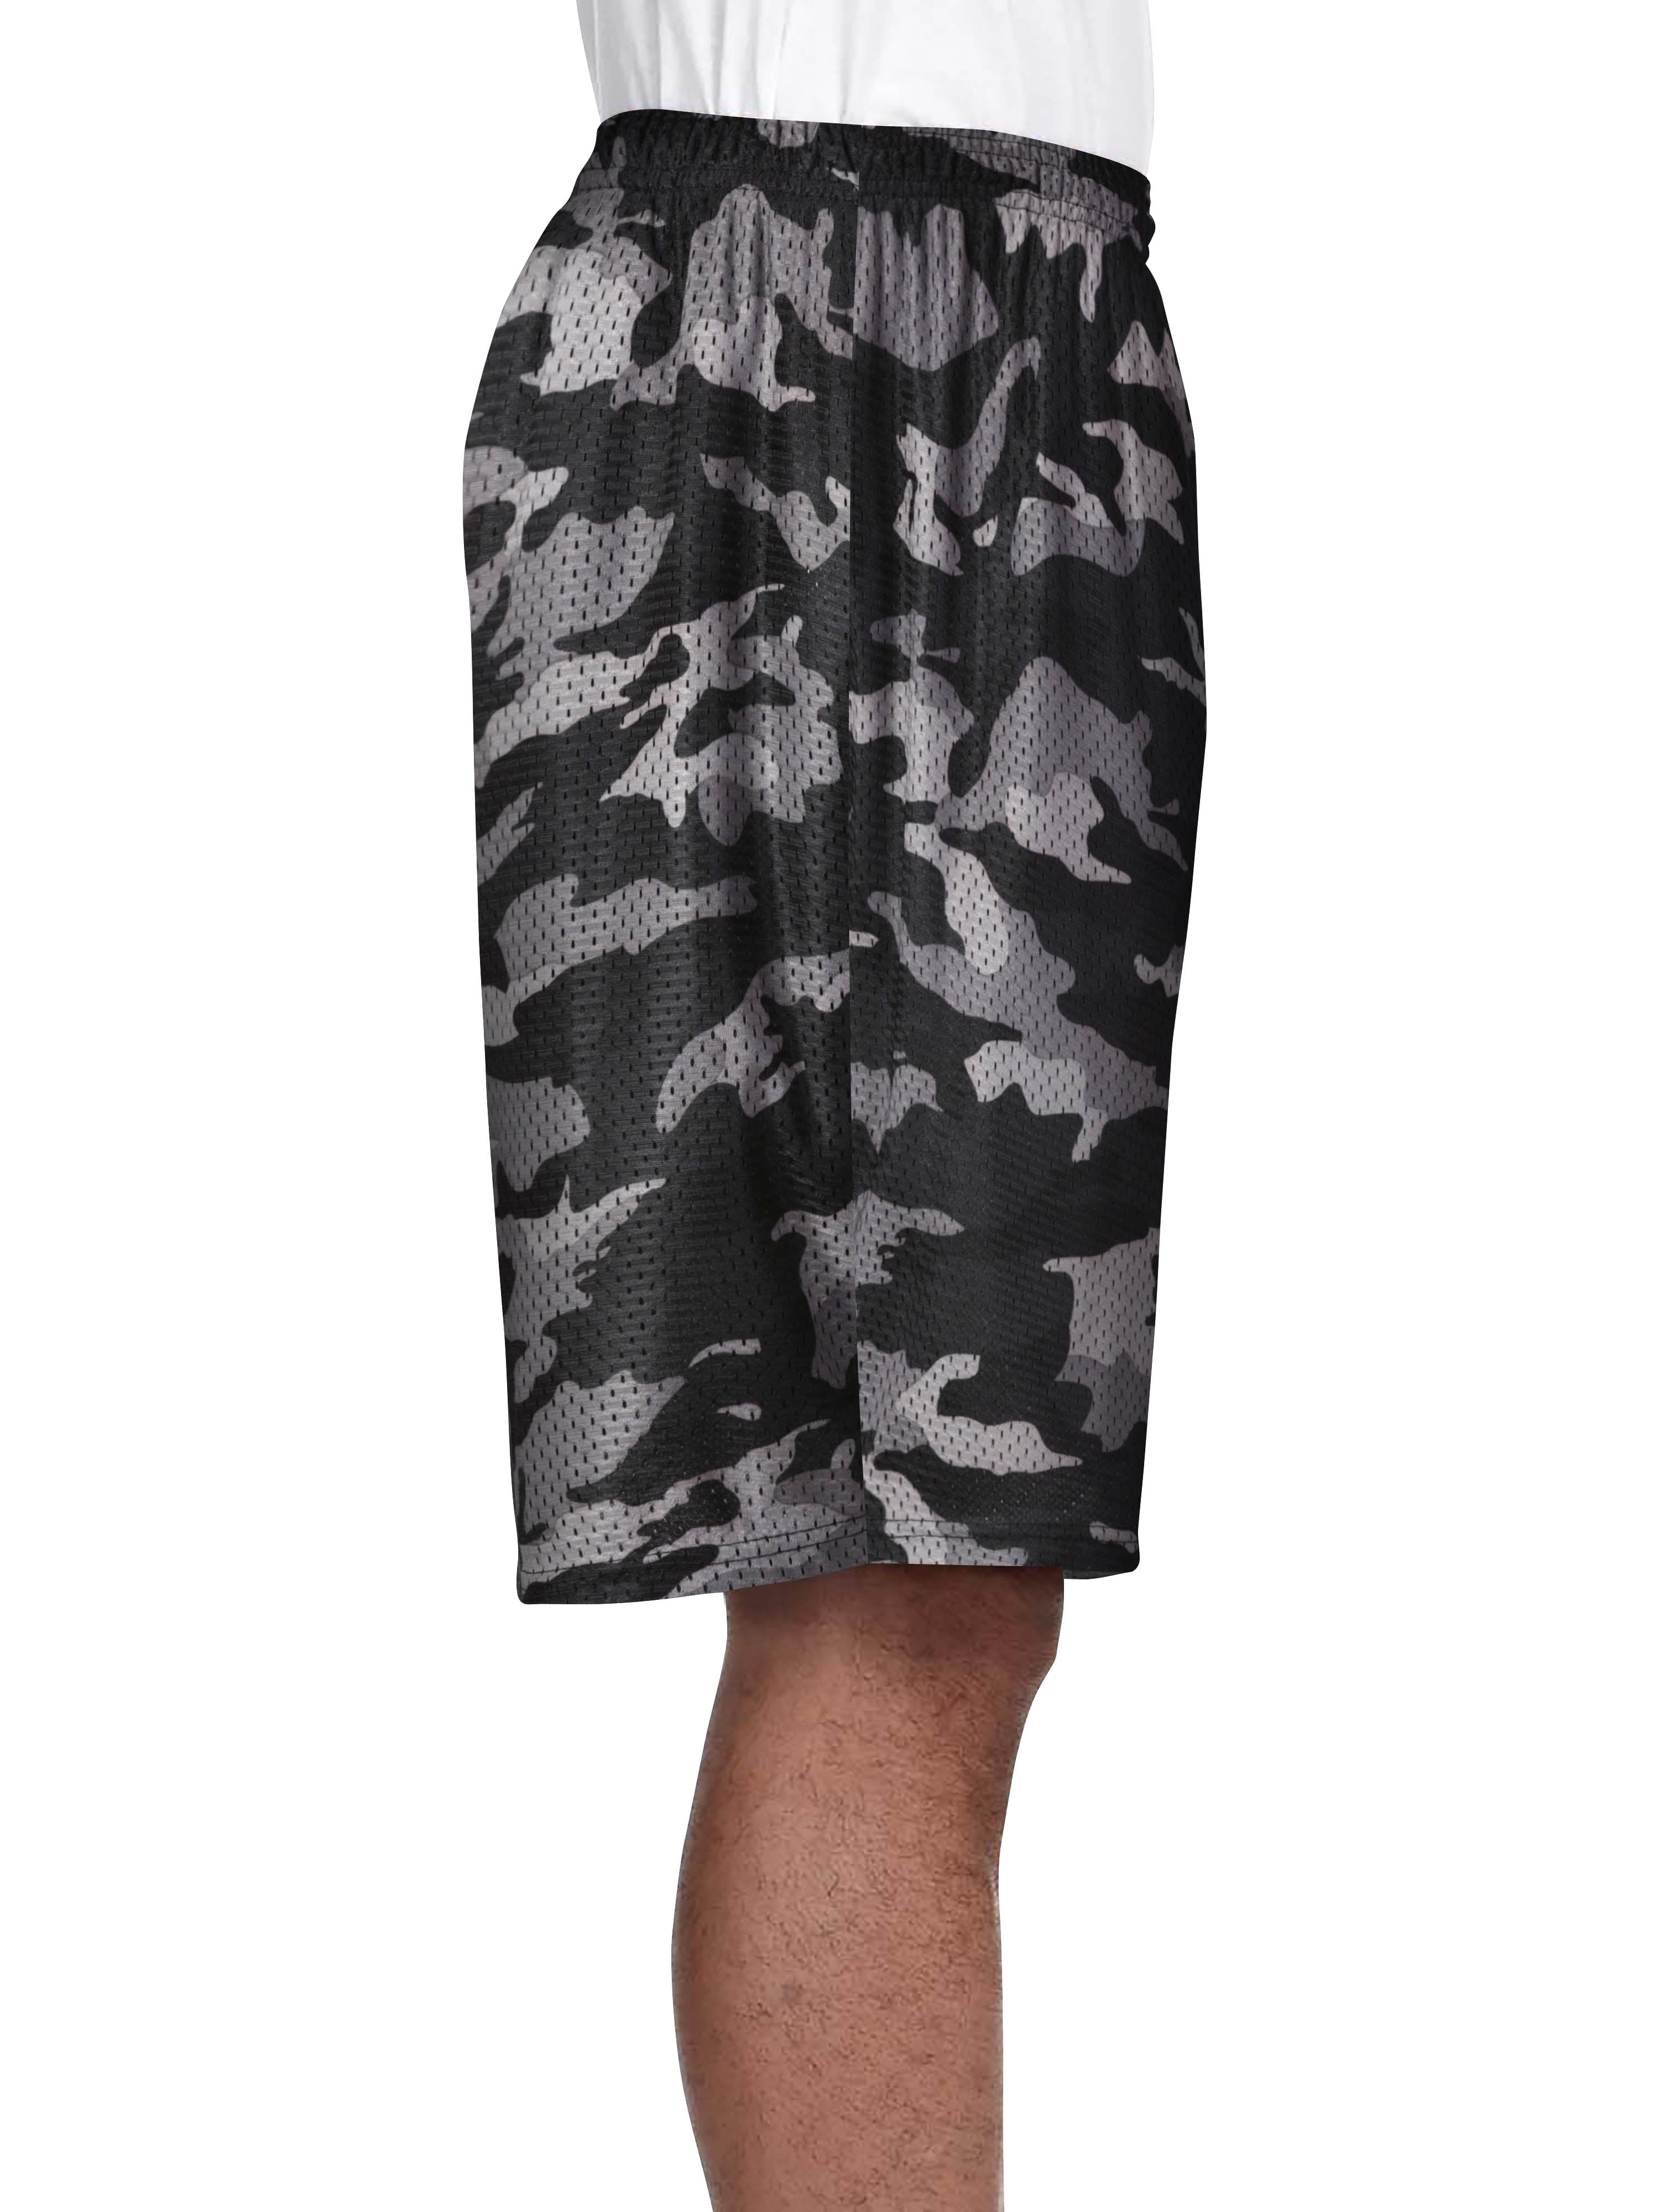 Icer Brands Men Men's Golden State Warriors Mesh Shorts in Black | Size XL | GSMC709SGWSC-BLK